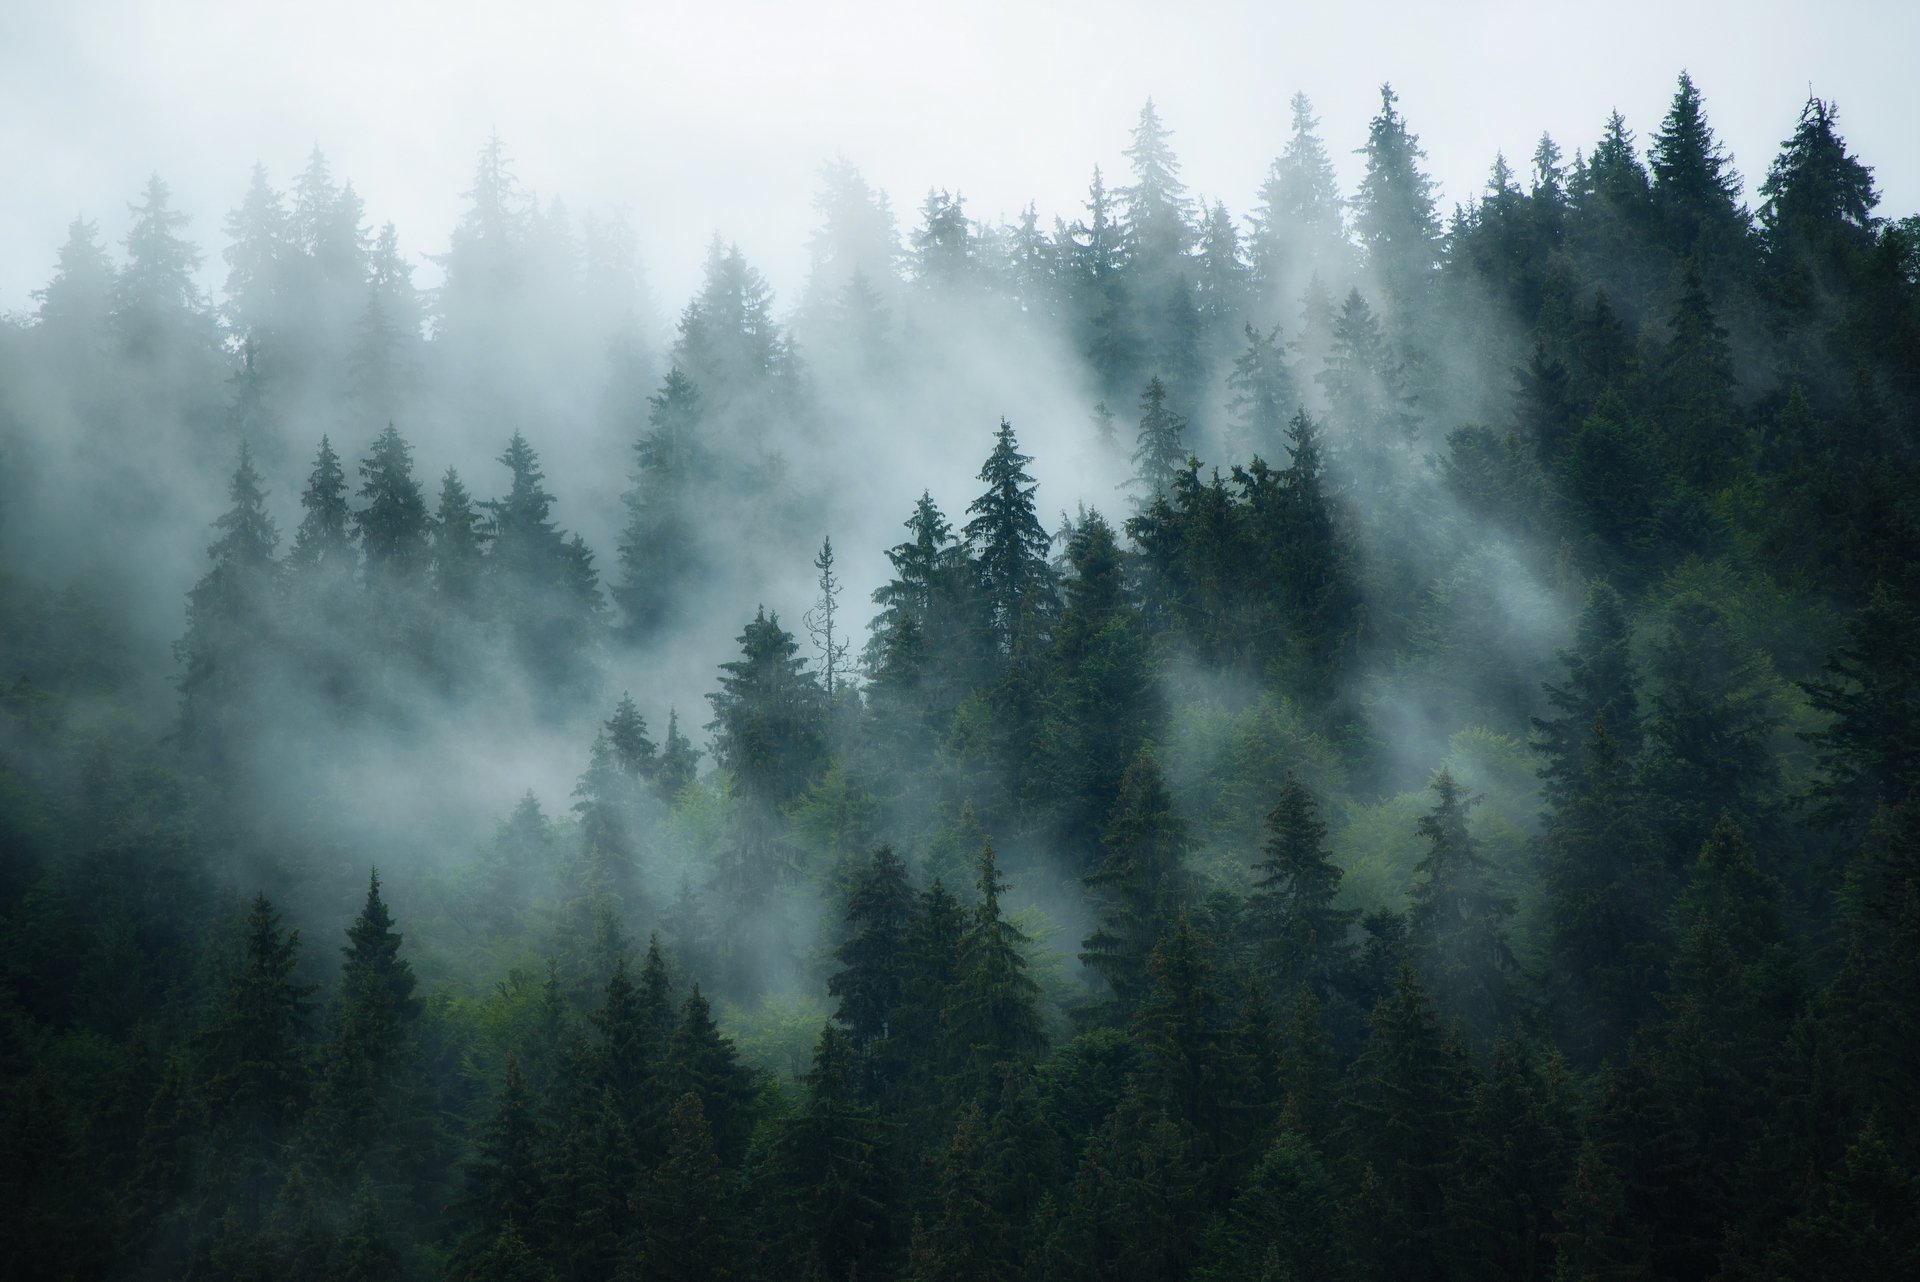 Wallpaper : forst, natur, nebel, Wald, fog, forest, mist, nature, woods,  eifel, tree, trees, baum, baume 2978x1980 - - 1038030 - HD Wallpapers -  WallHere